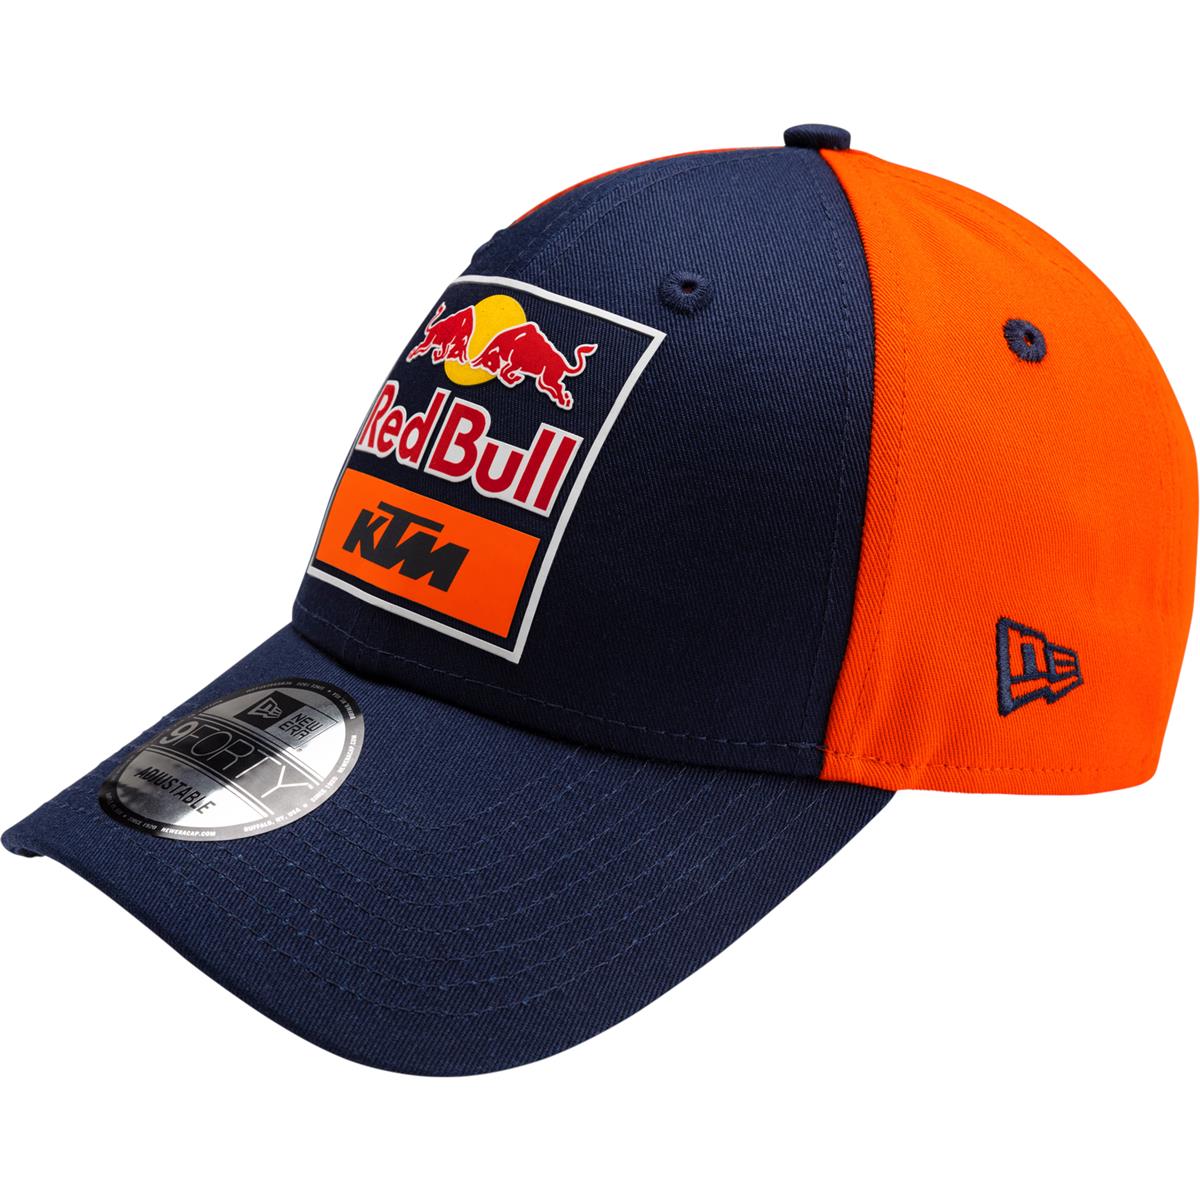 Red Bull Snapback Cappellino KTM Official Teamline Replica - Curved - Navy/Arancione